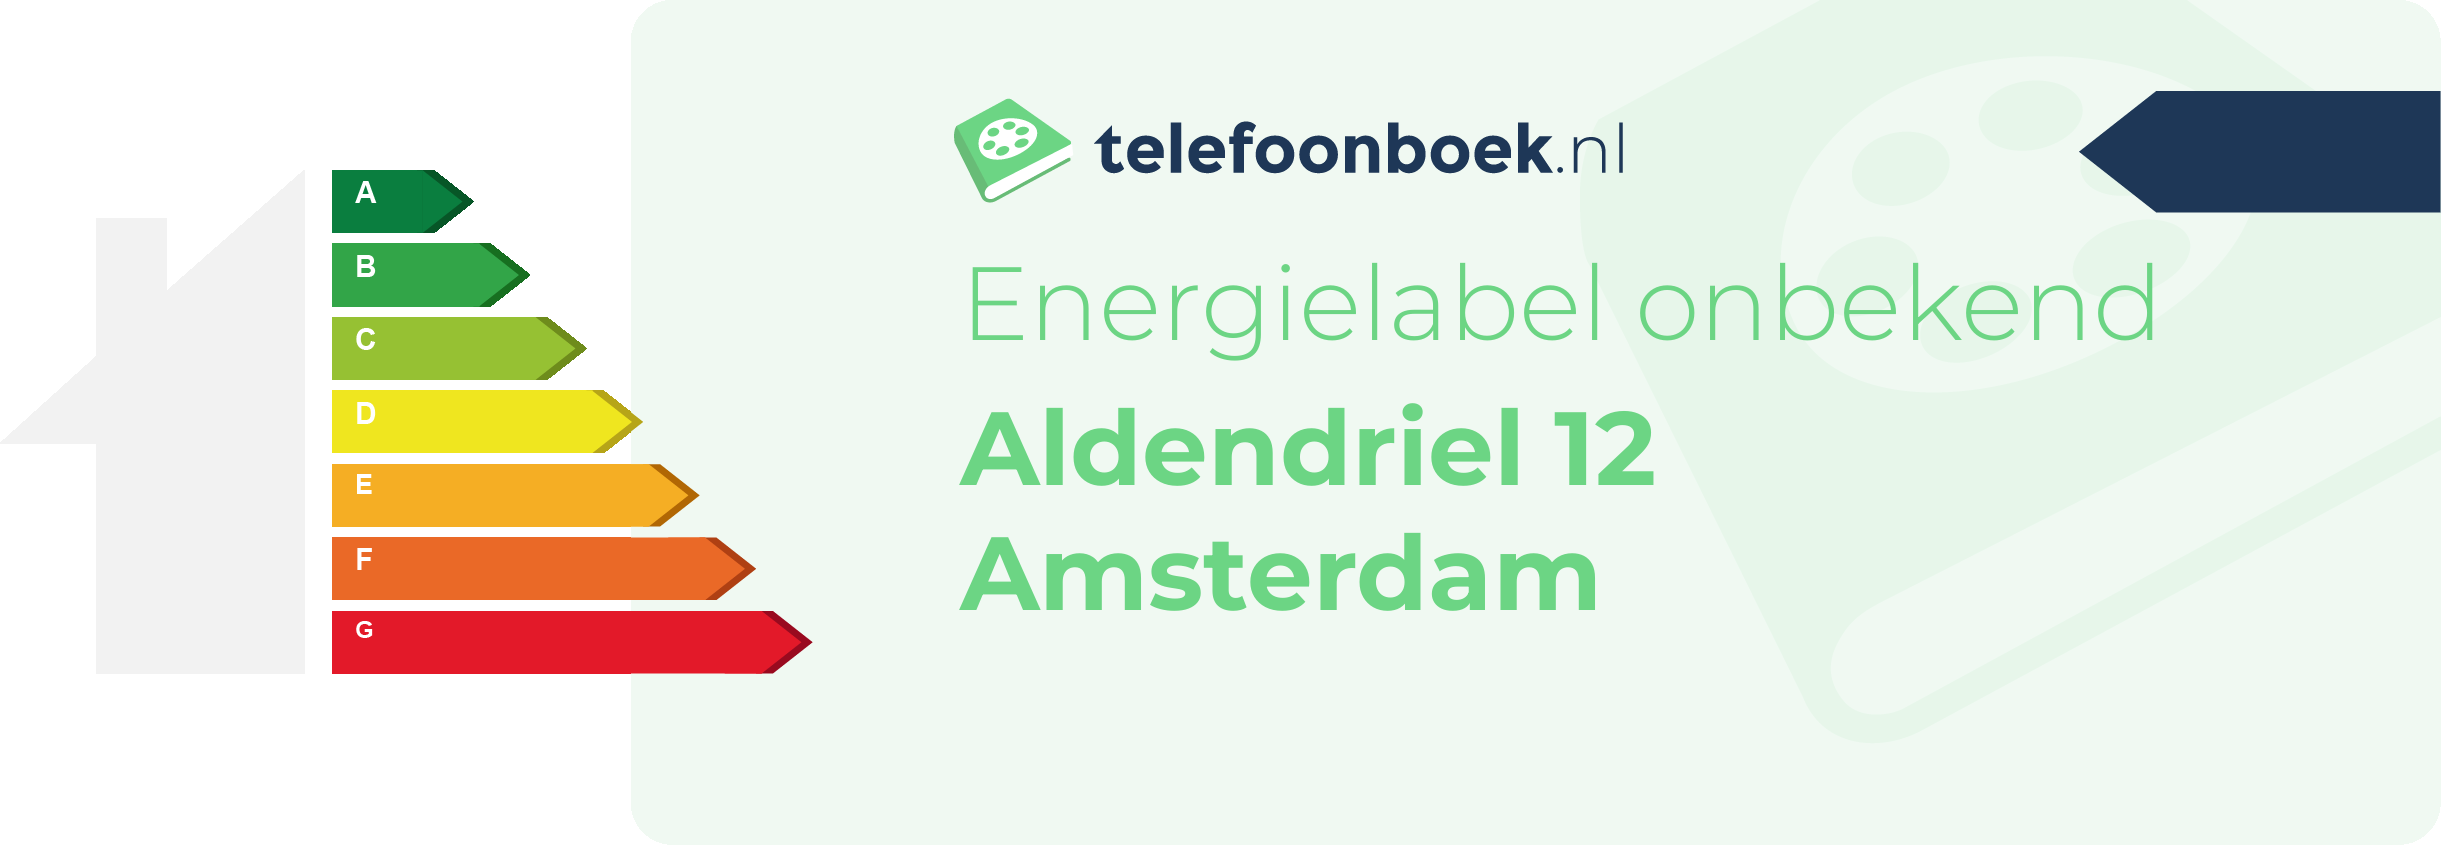 Energielabel Aldendriel 12 Amsterdam